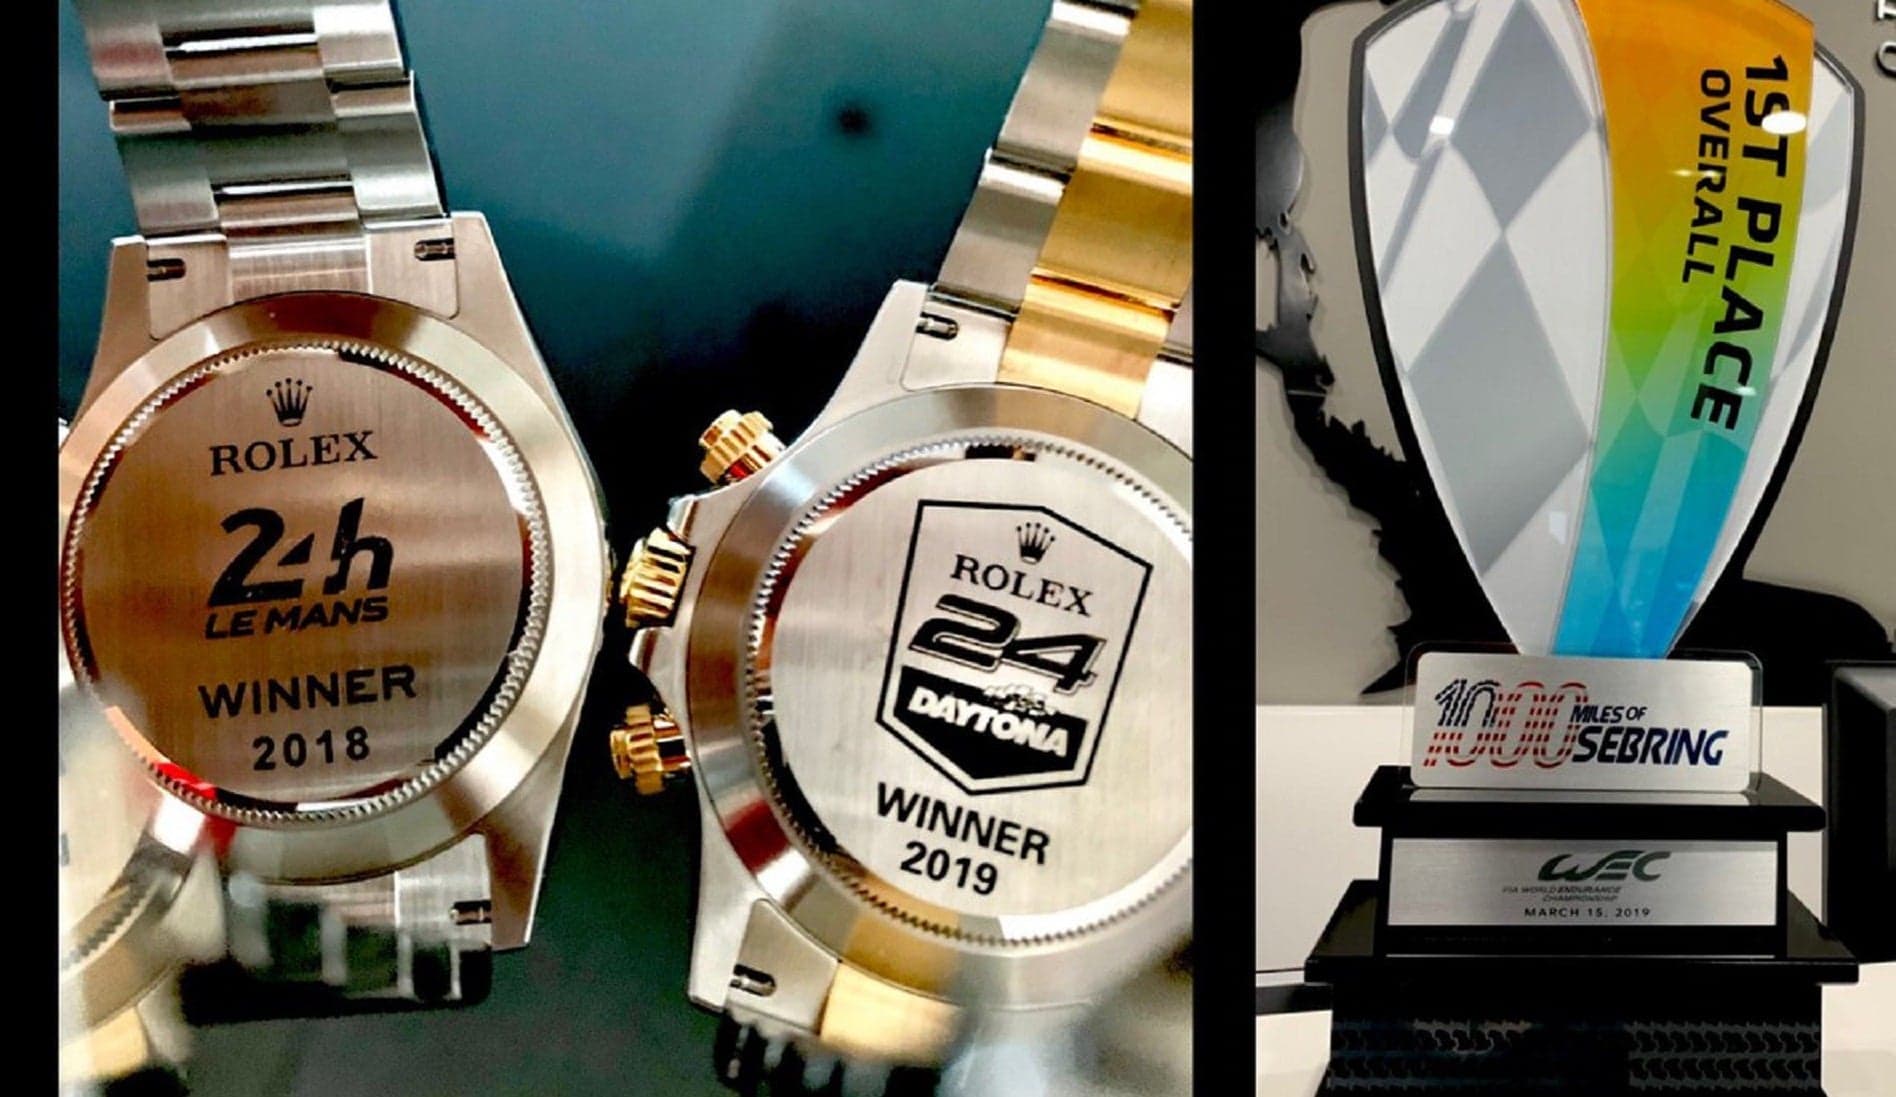 Fernando Alonso Flaunts Racing Superiority Via Tweet With Rolex Watches, Racing Trophies